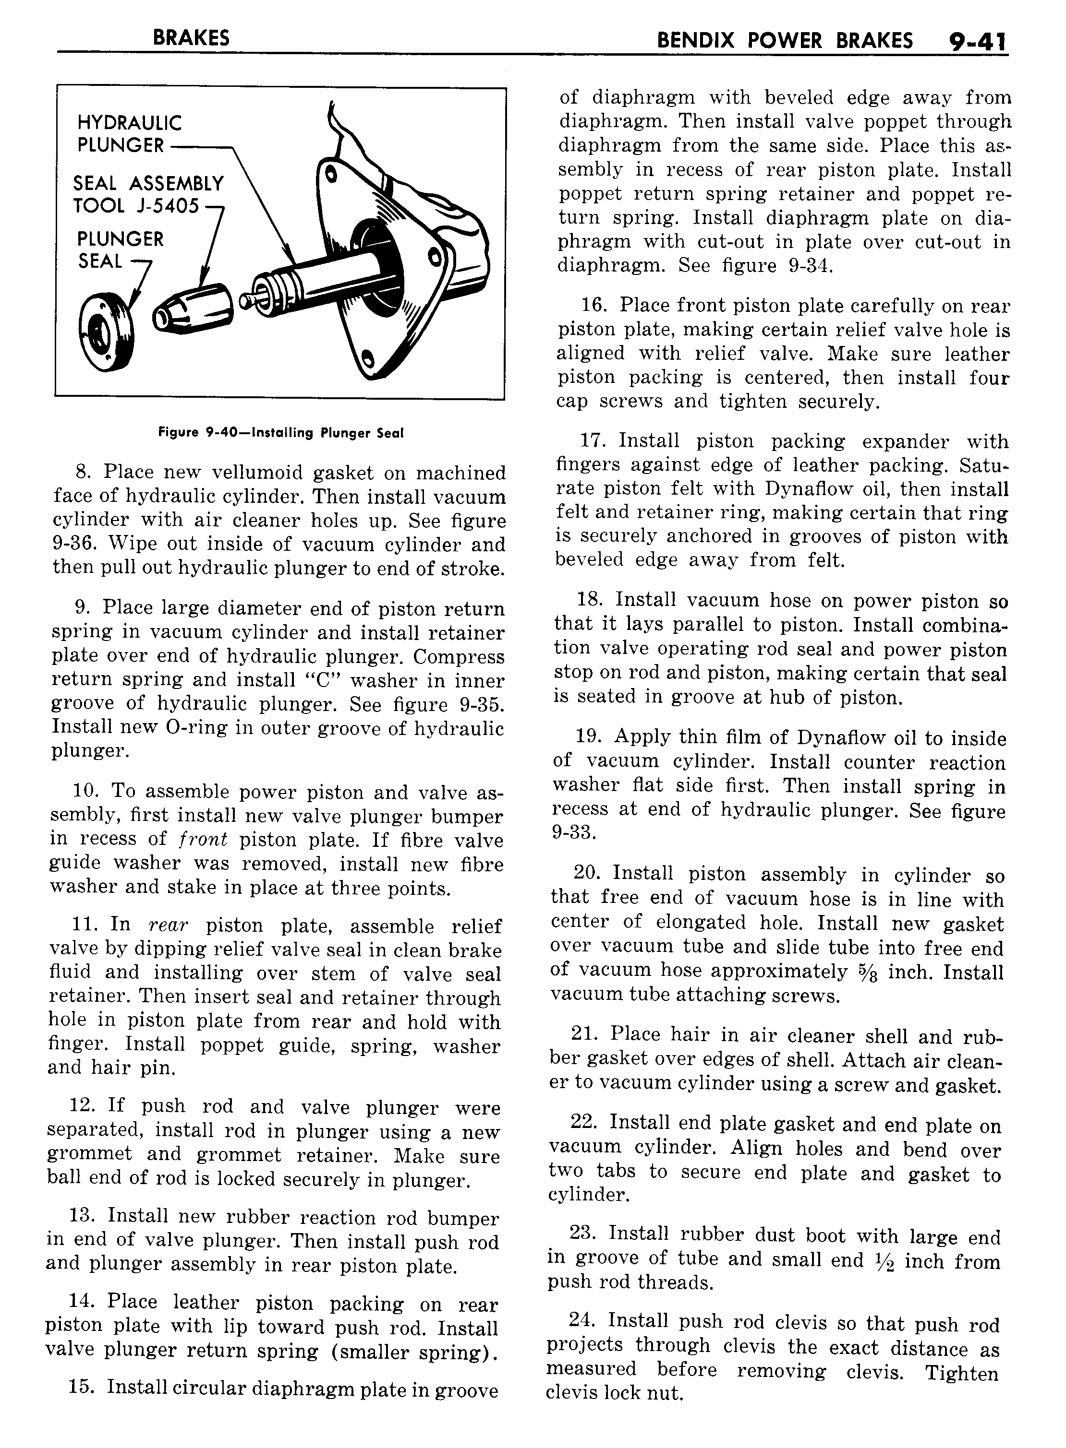 n_10 1957 Buick Shop Manual - Brakes-041-041.jpg